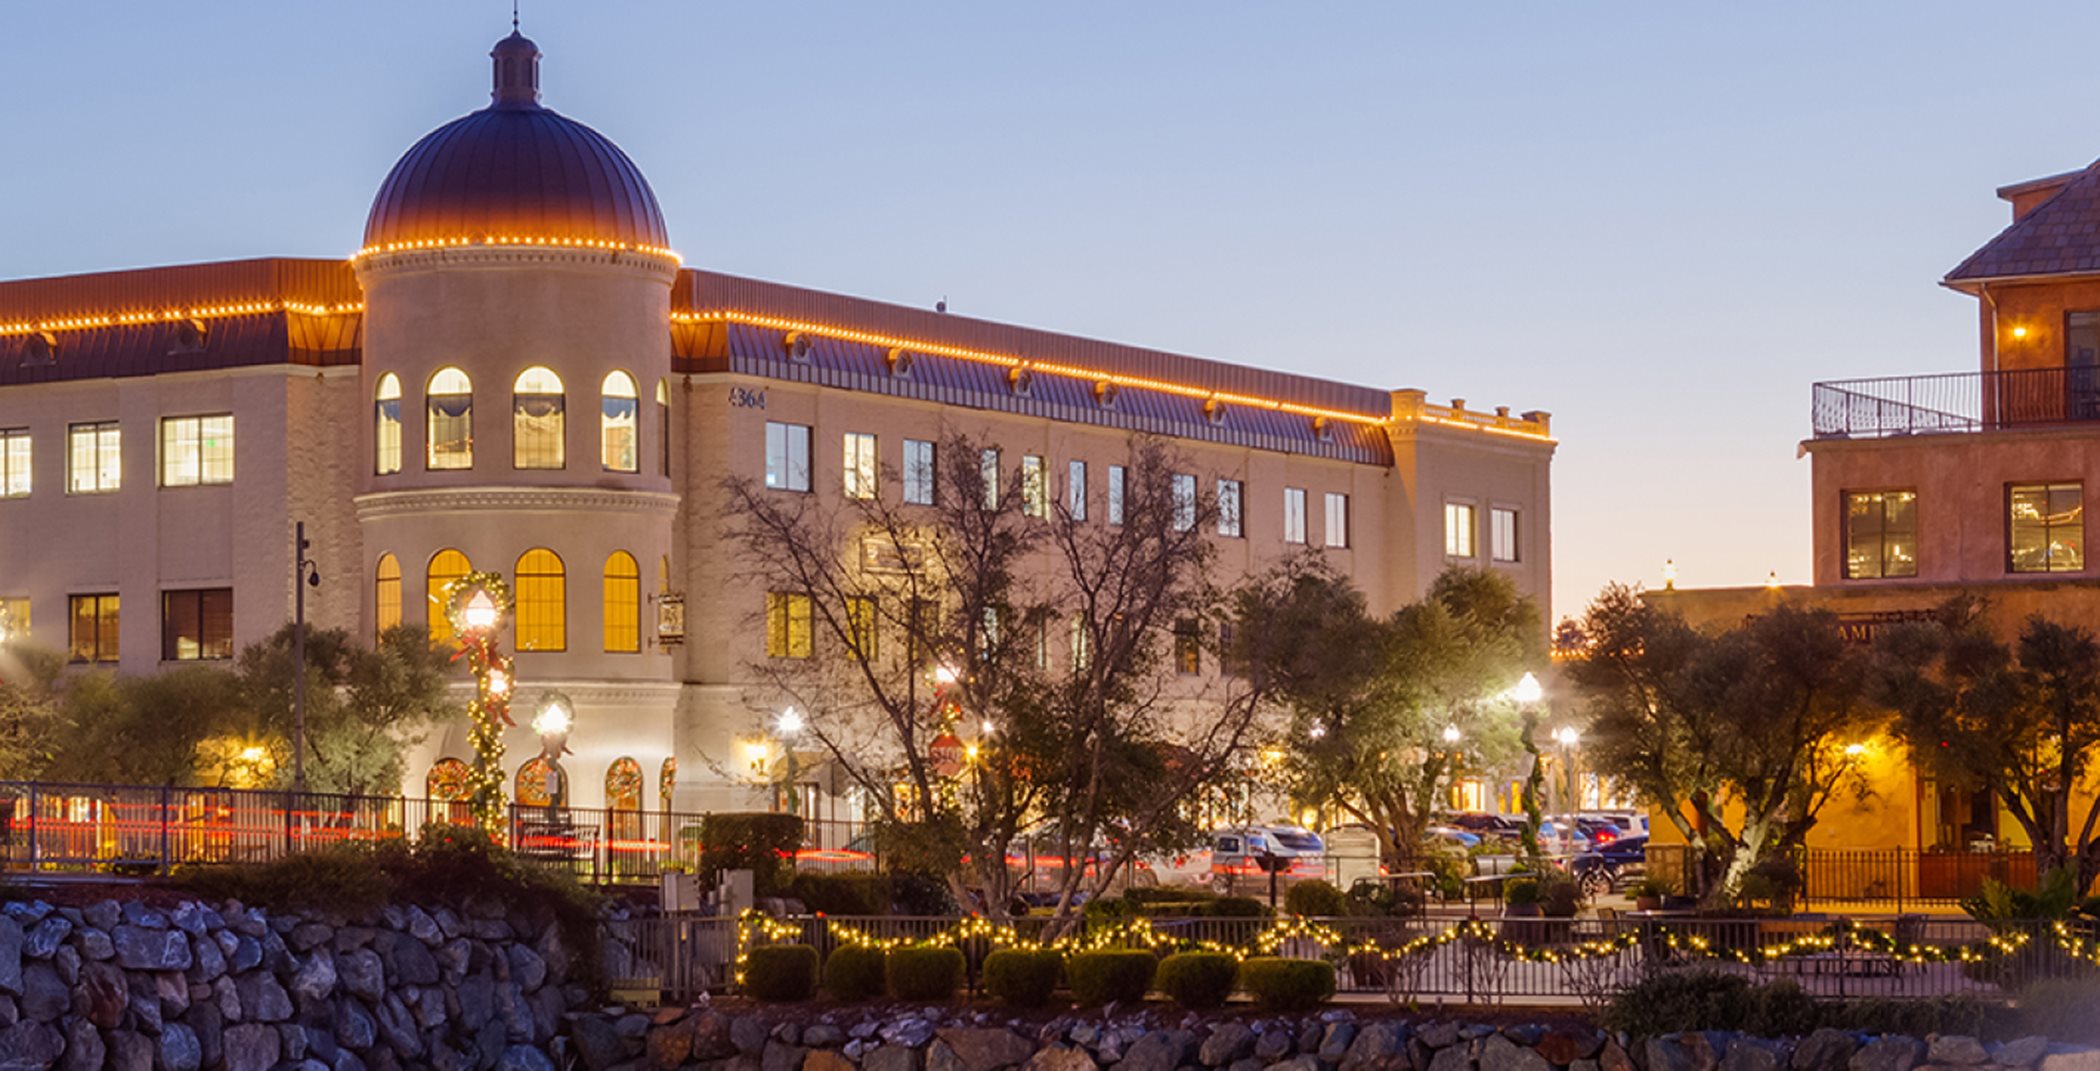  El Dorado Hills Town Center at dusk with holiday lights